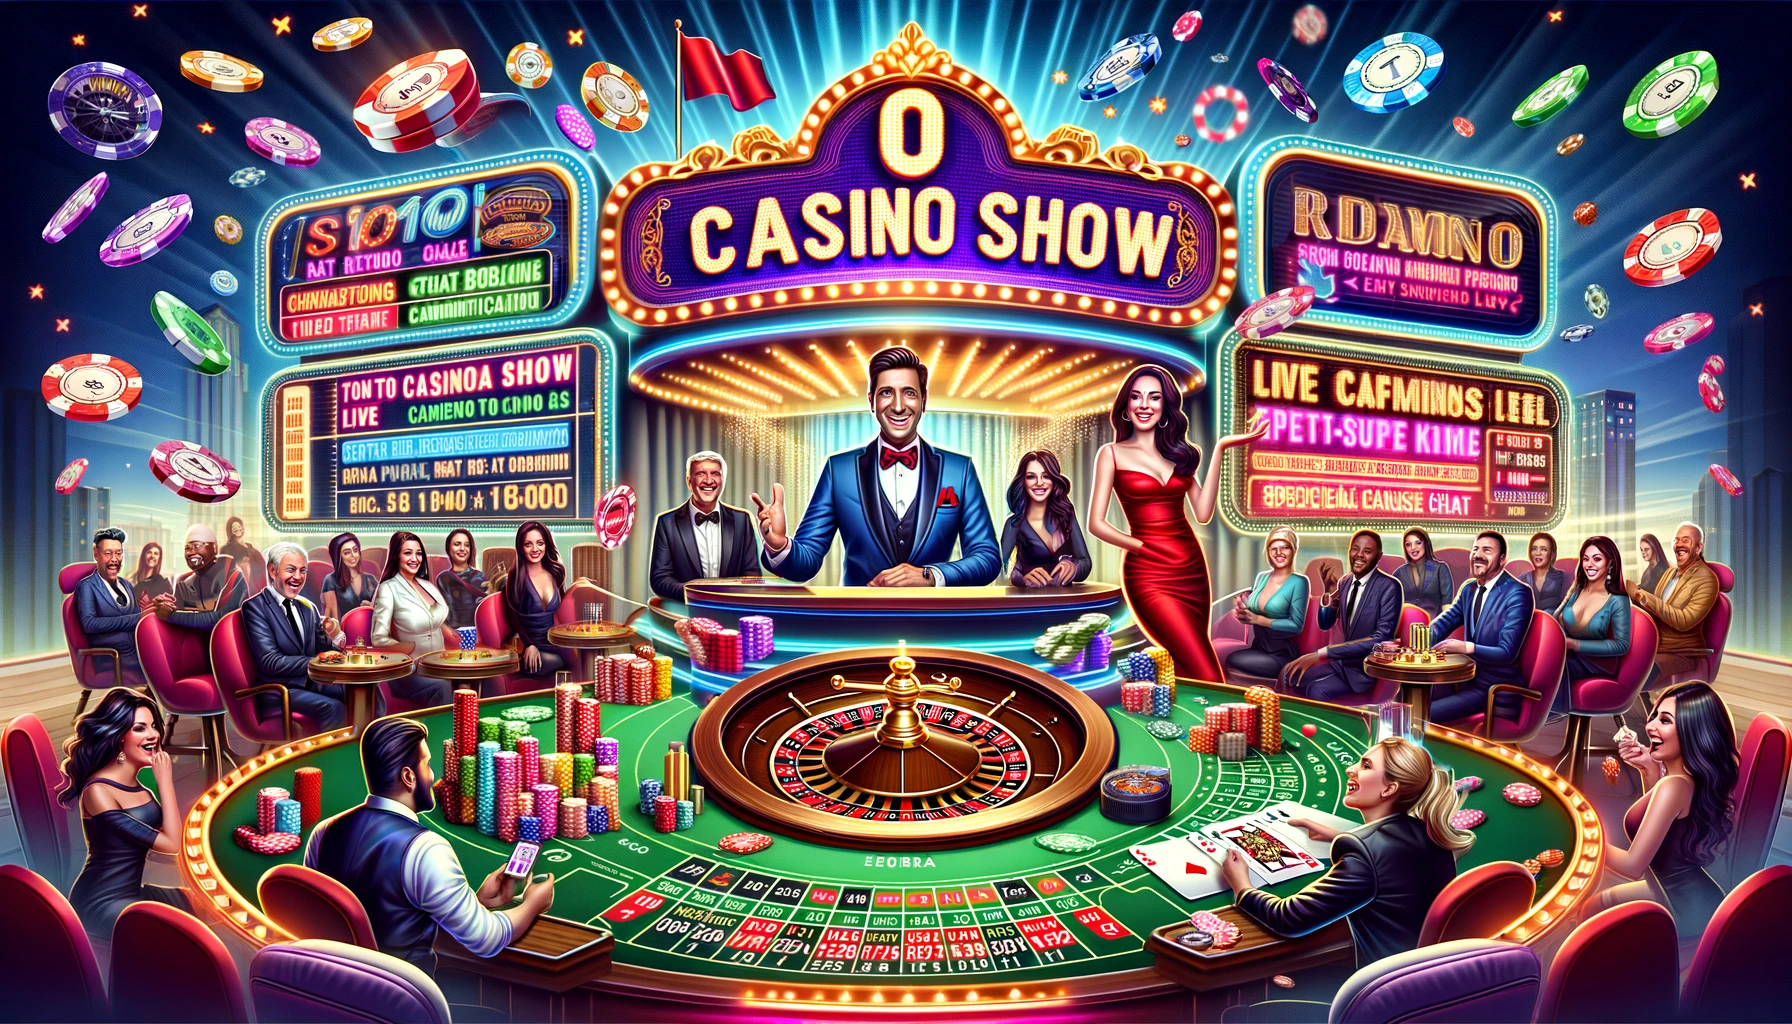 The casino television show